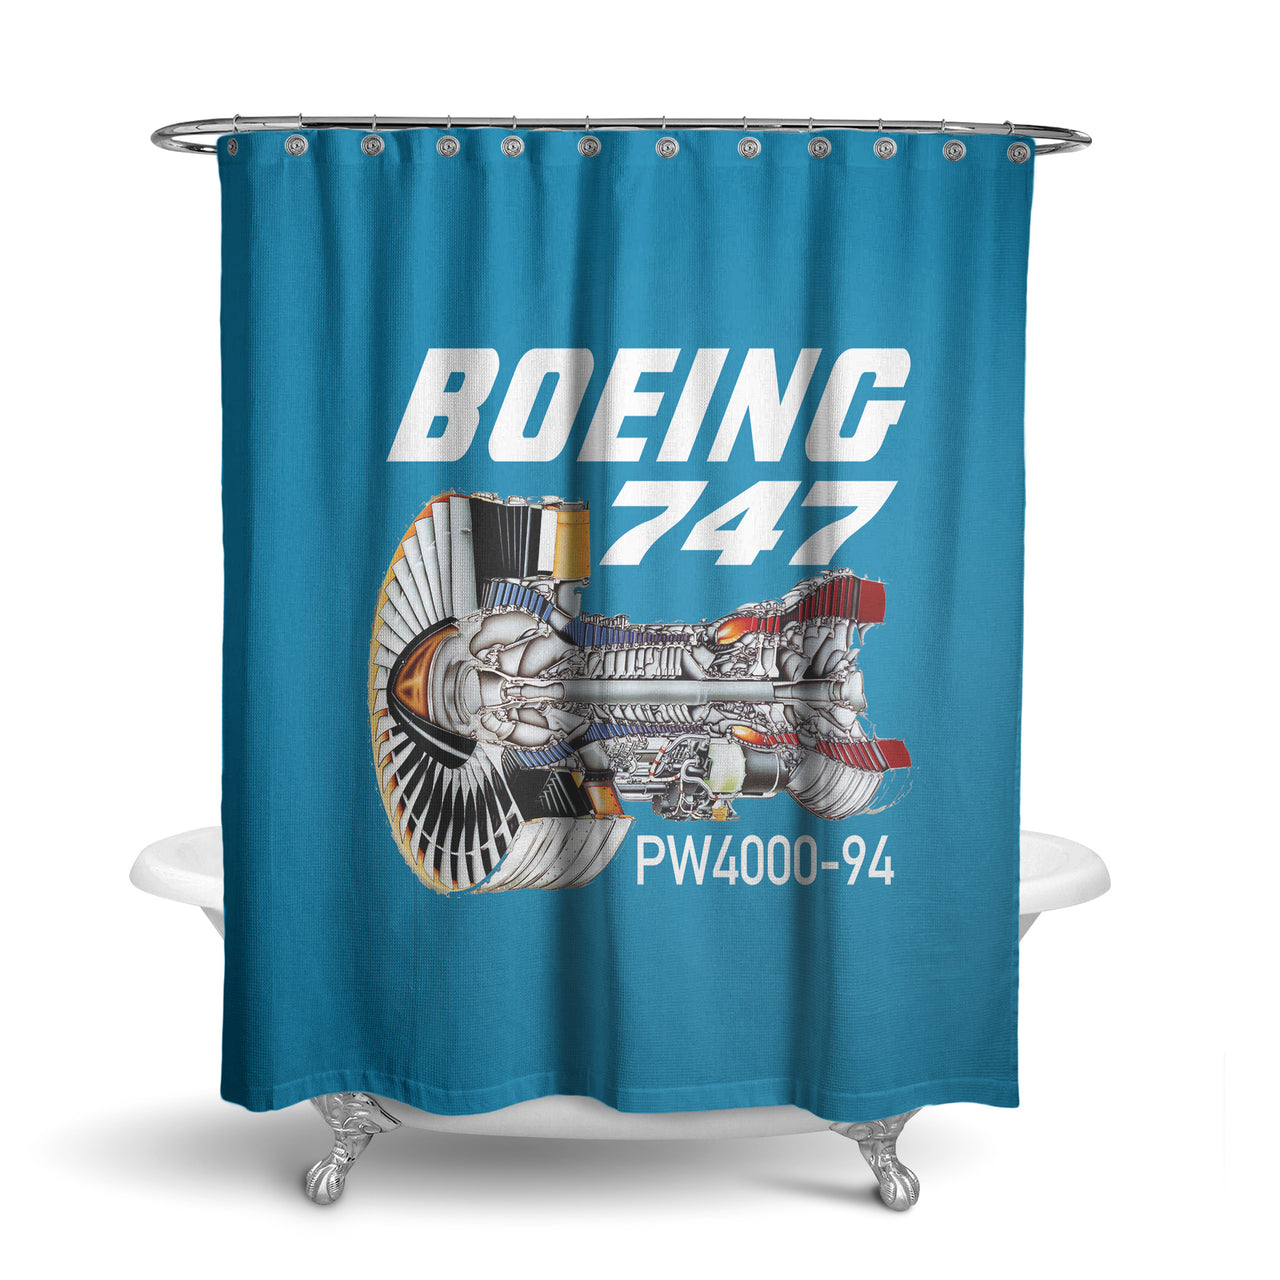 Boeing 747 & PW4000-94 Engine Designed Shower Curtains